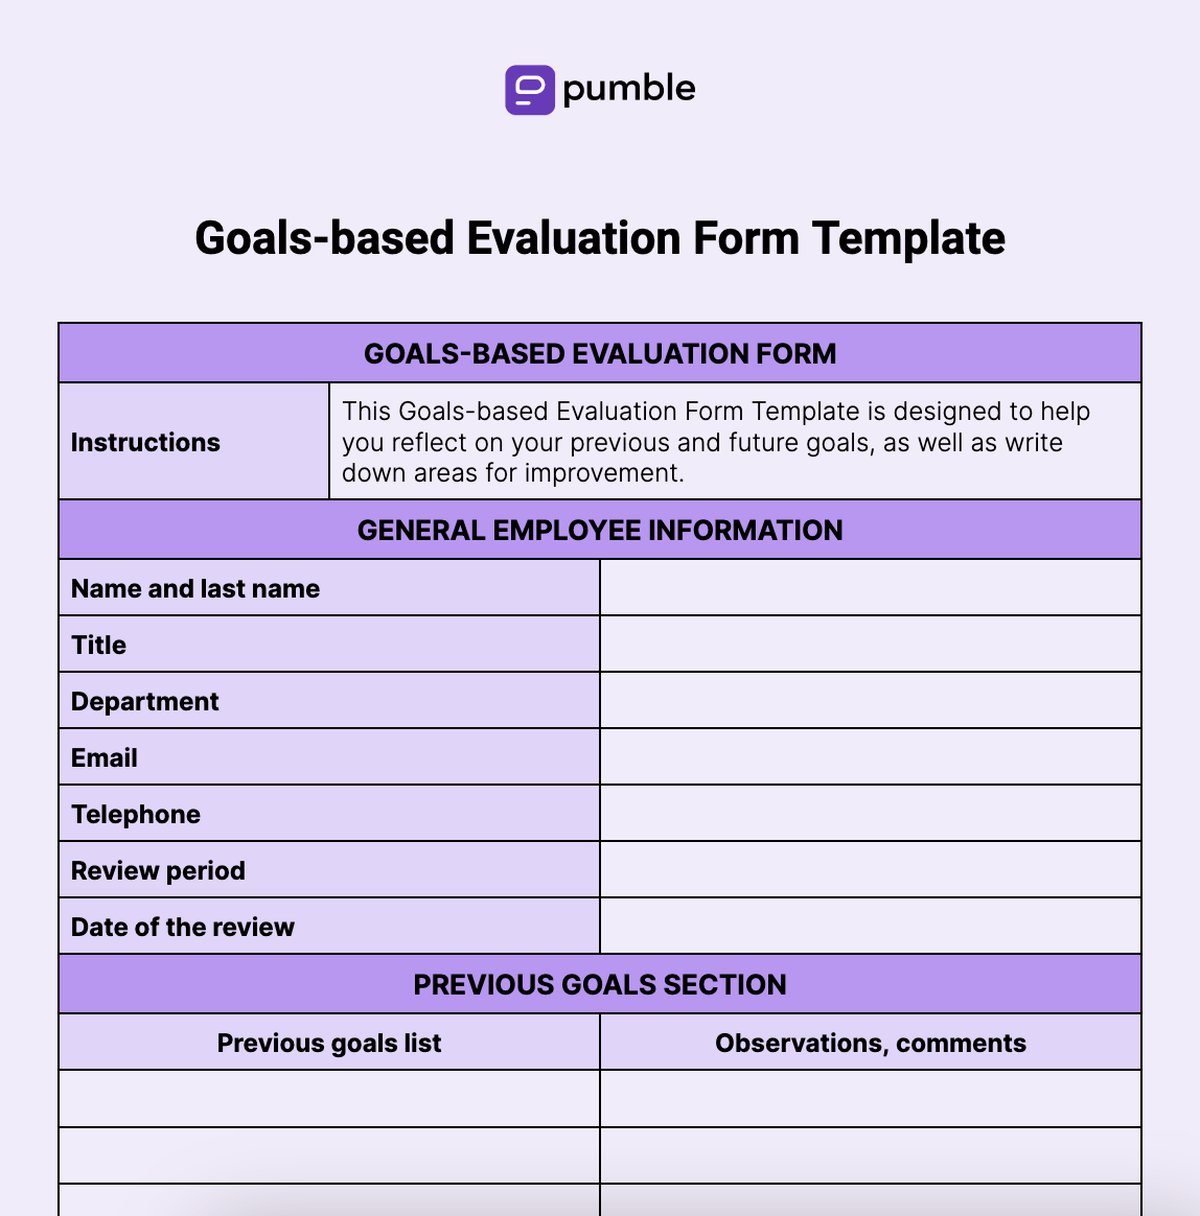 Goals-based Evaluation Form Template -min